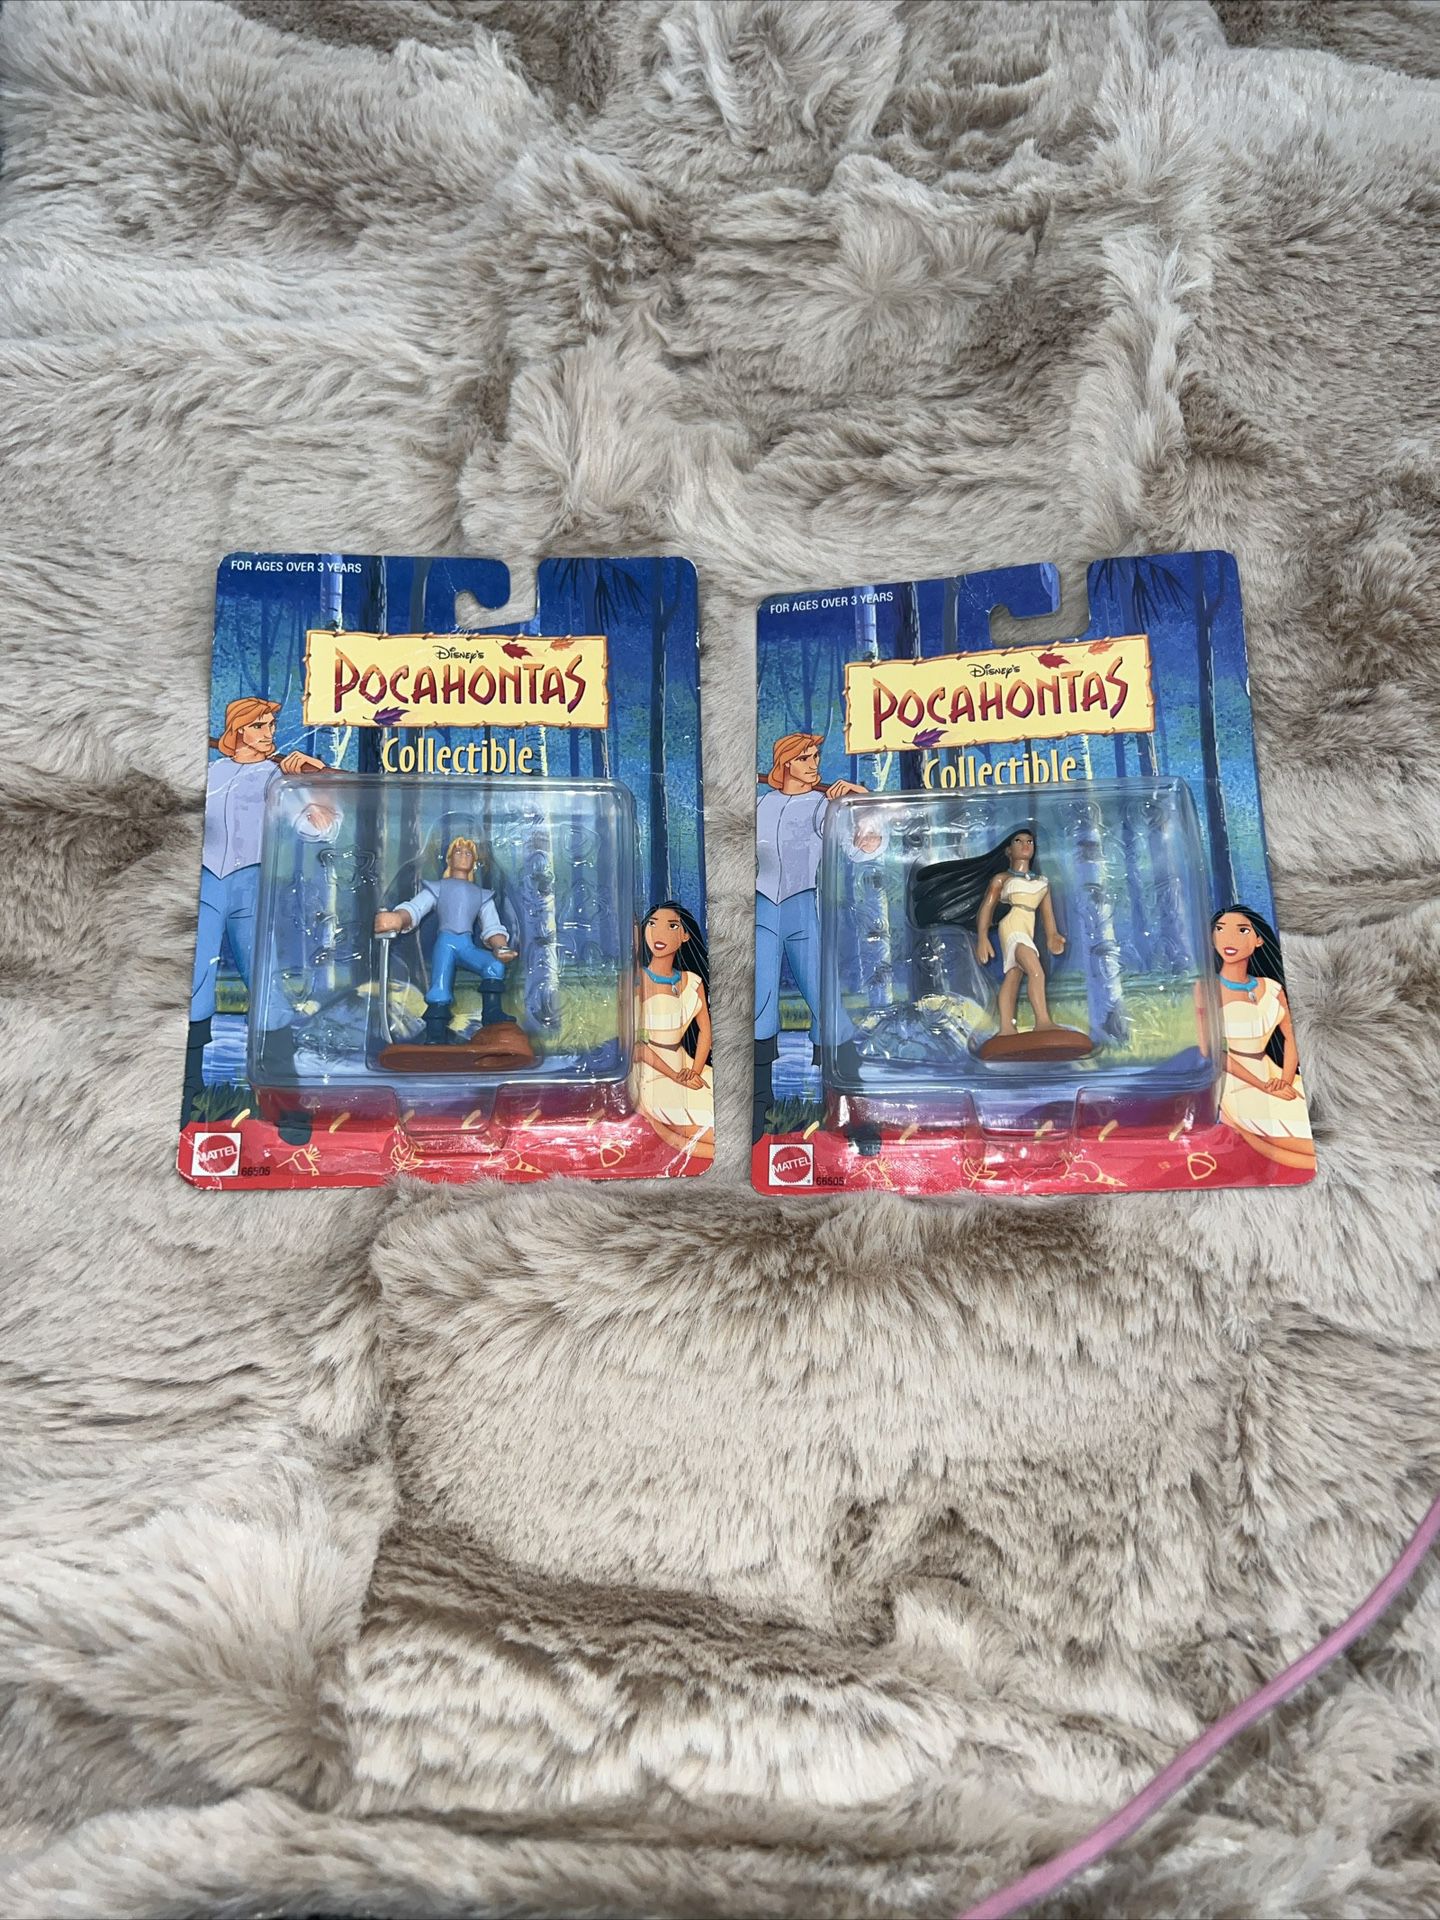 Pocahontas Collectible Mini Figurine Set  